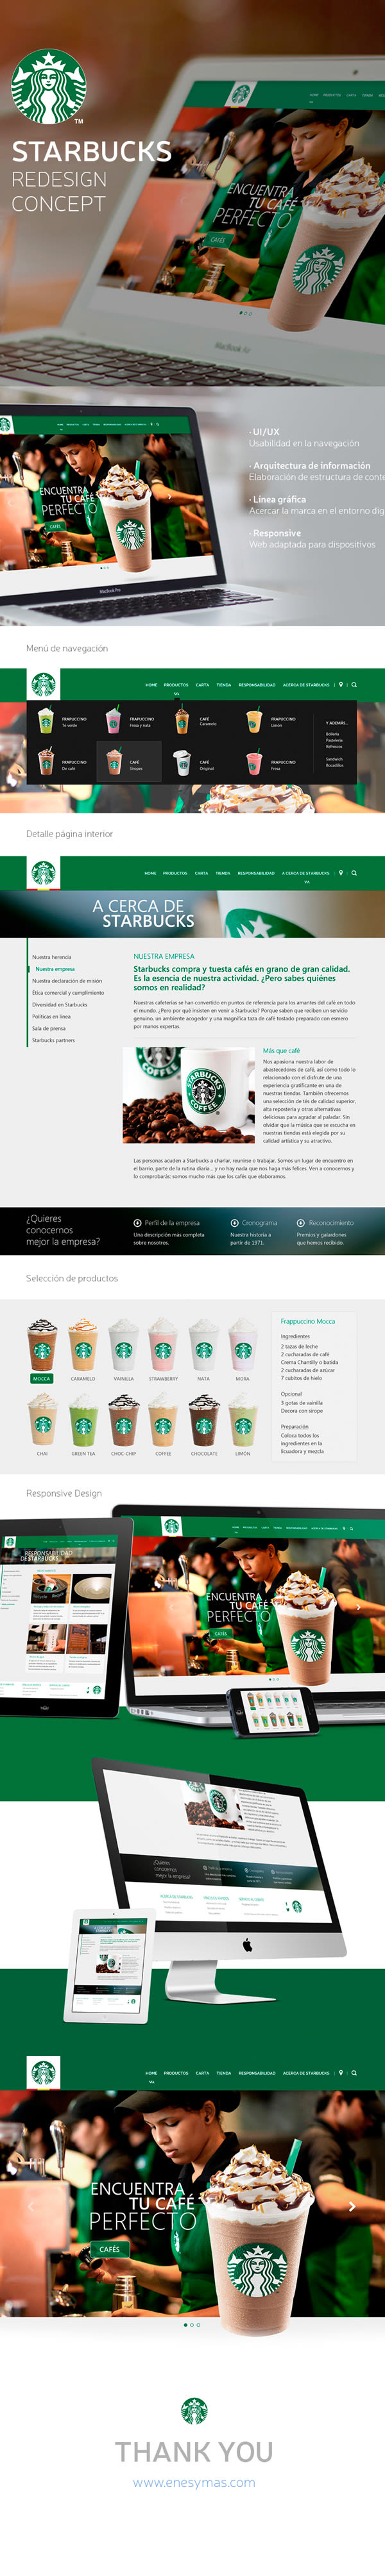 Starbucks Redesign 0